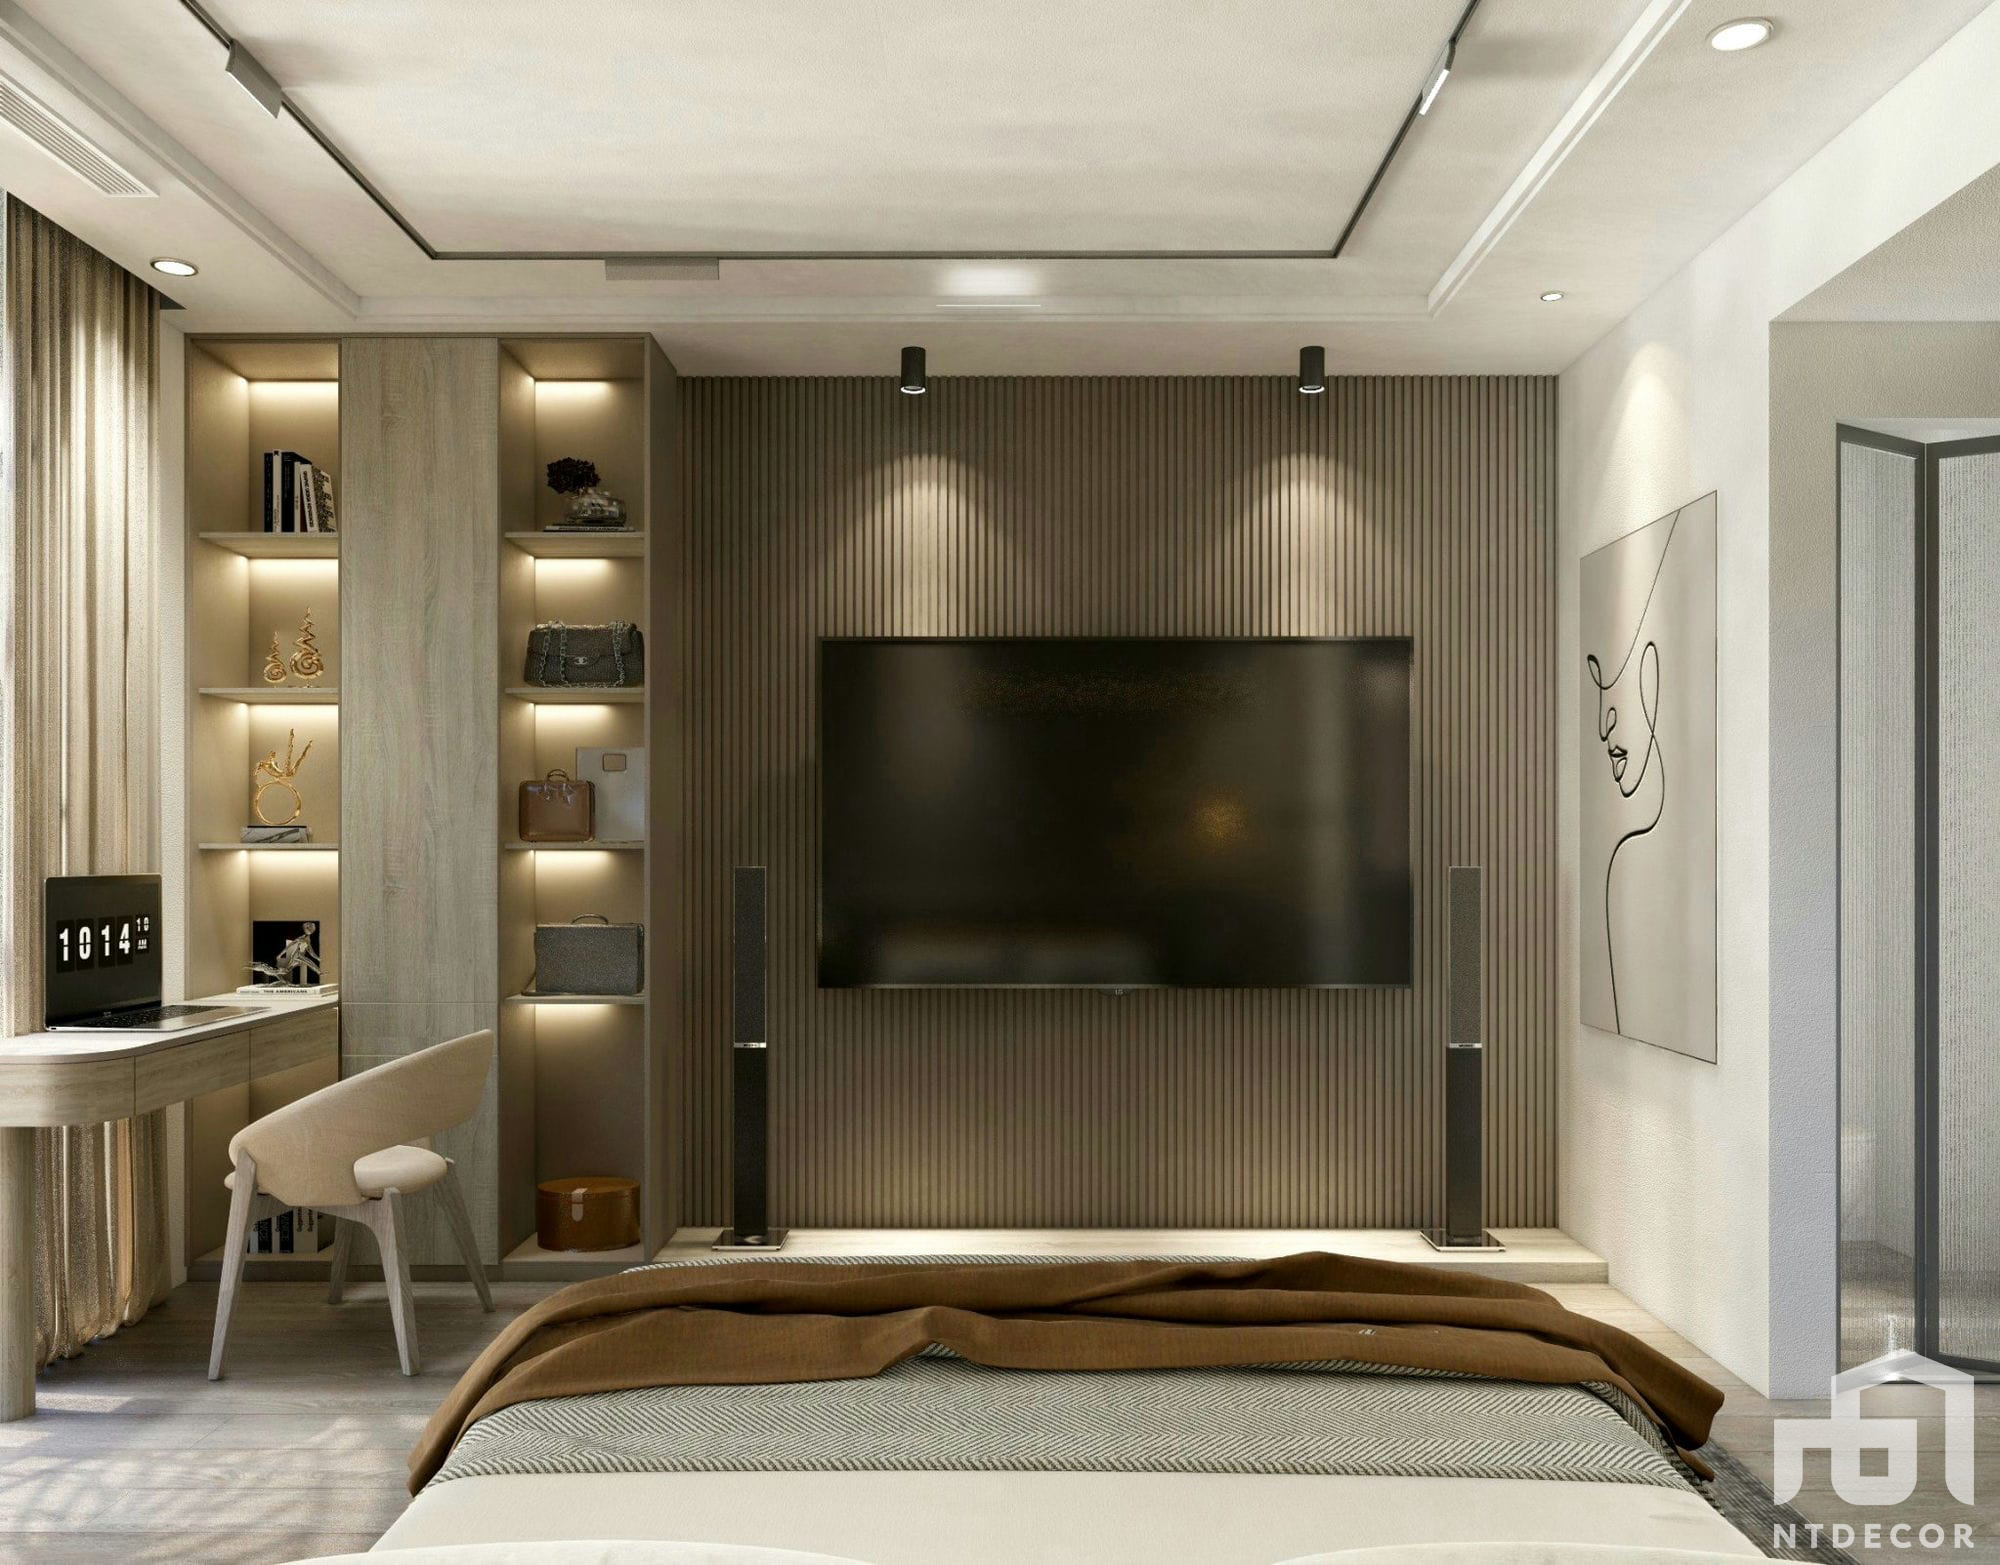 Master Bedroom 3D Design of Van An's House Interior Design Modern Style | NTDecor